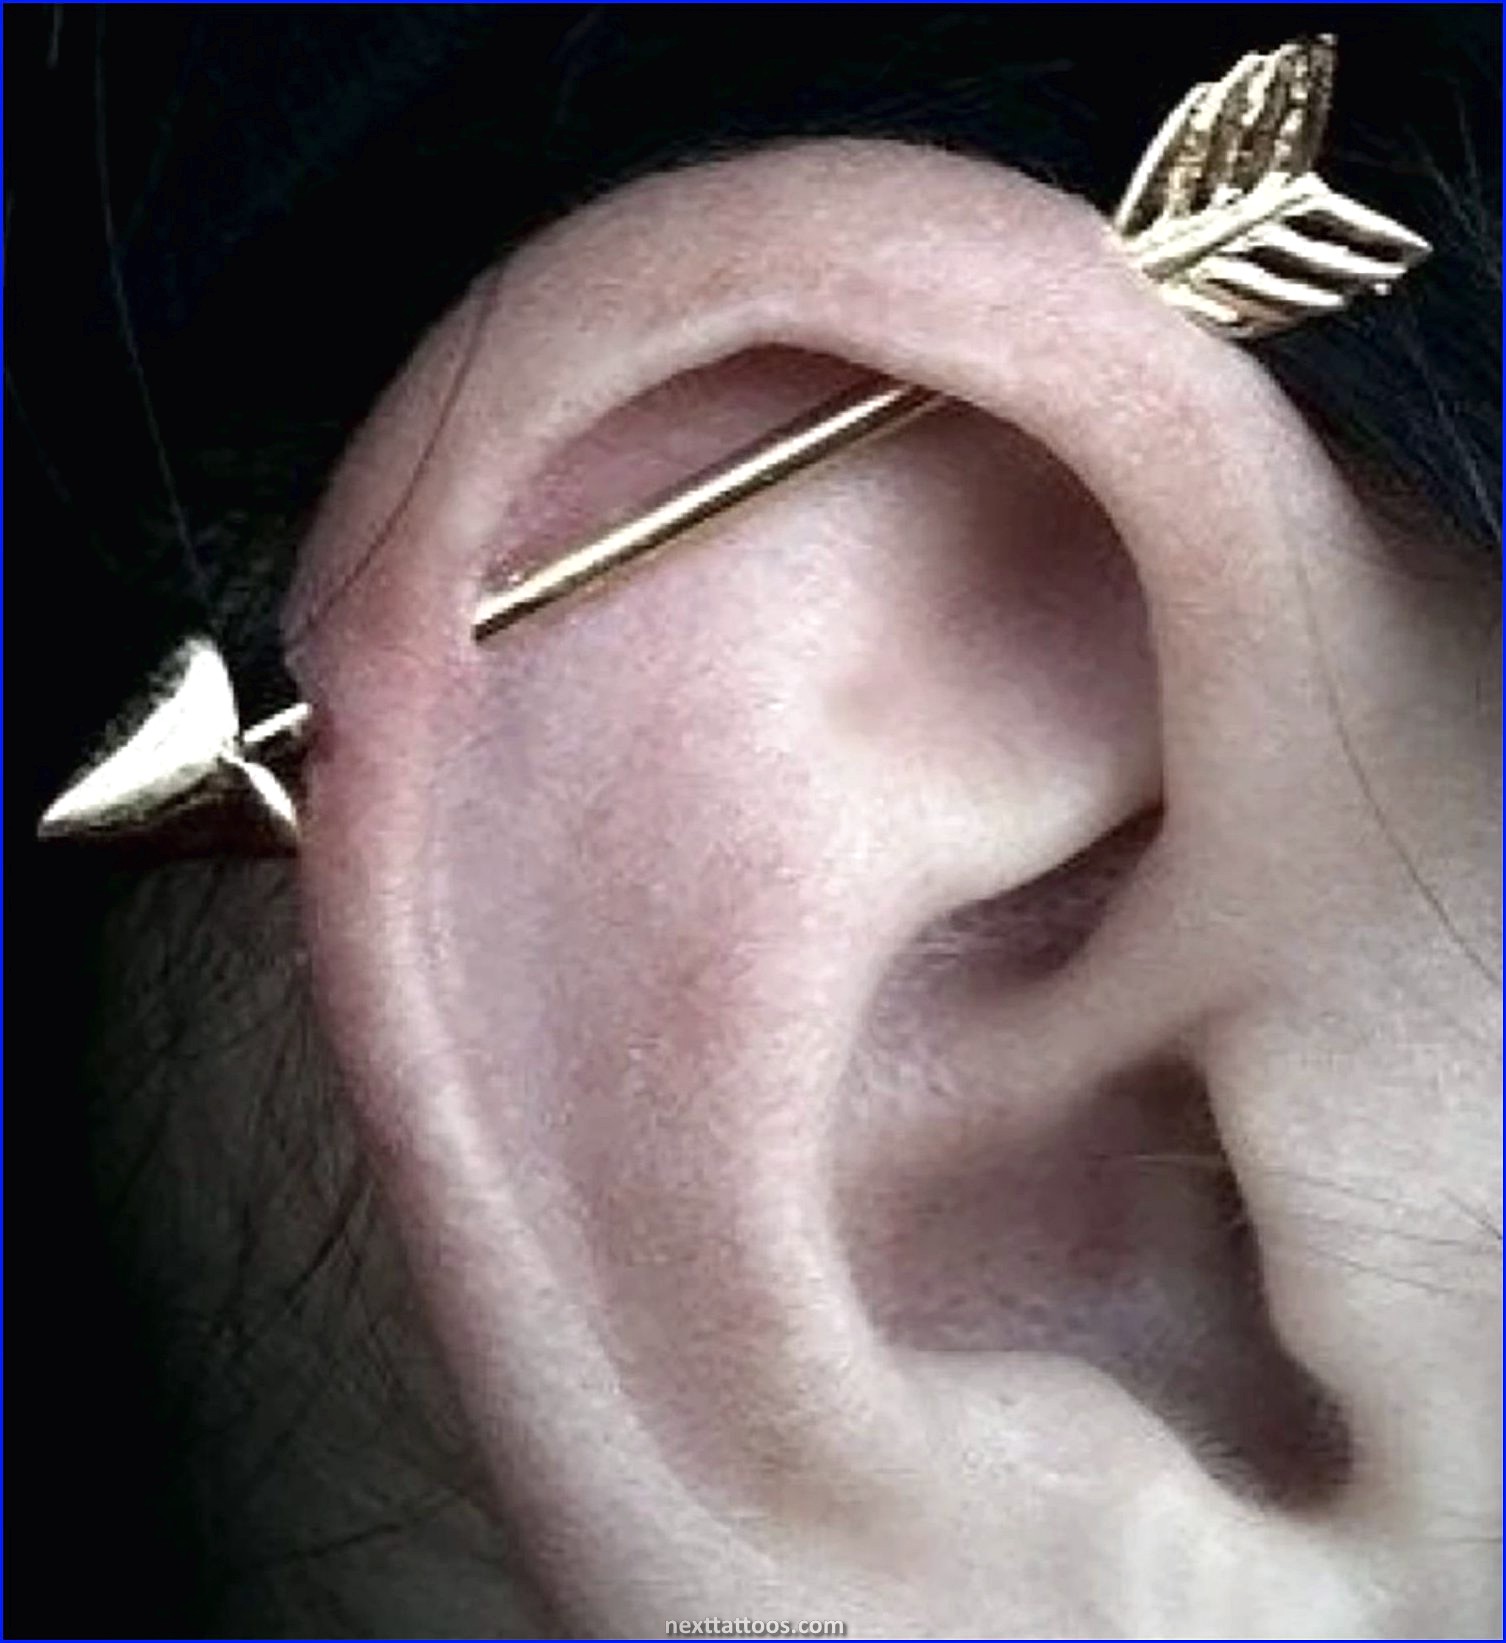 Ear Piercing Ideas With Industrial Theme